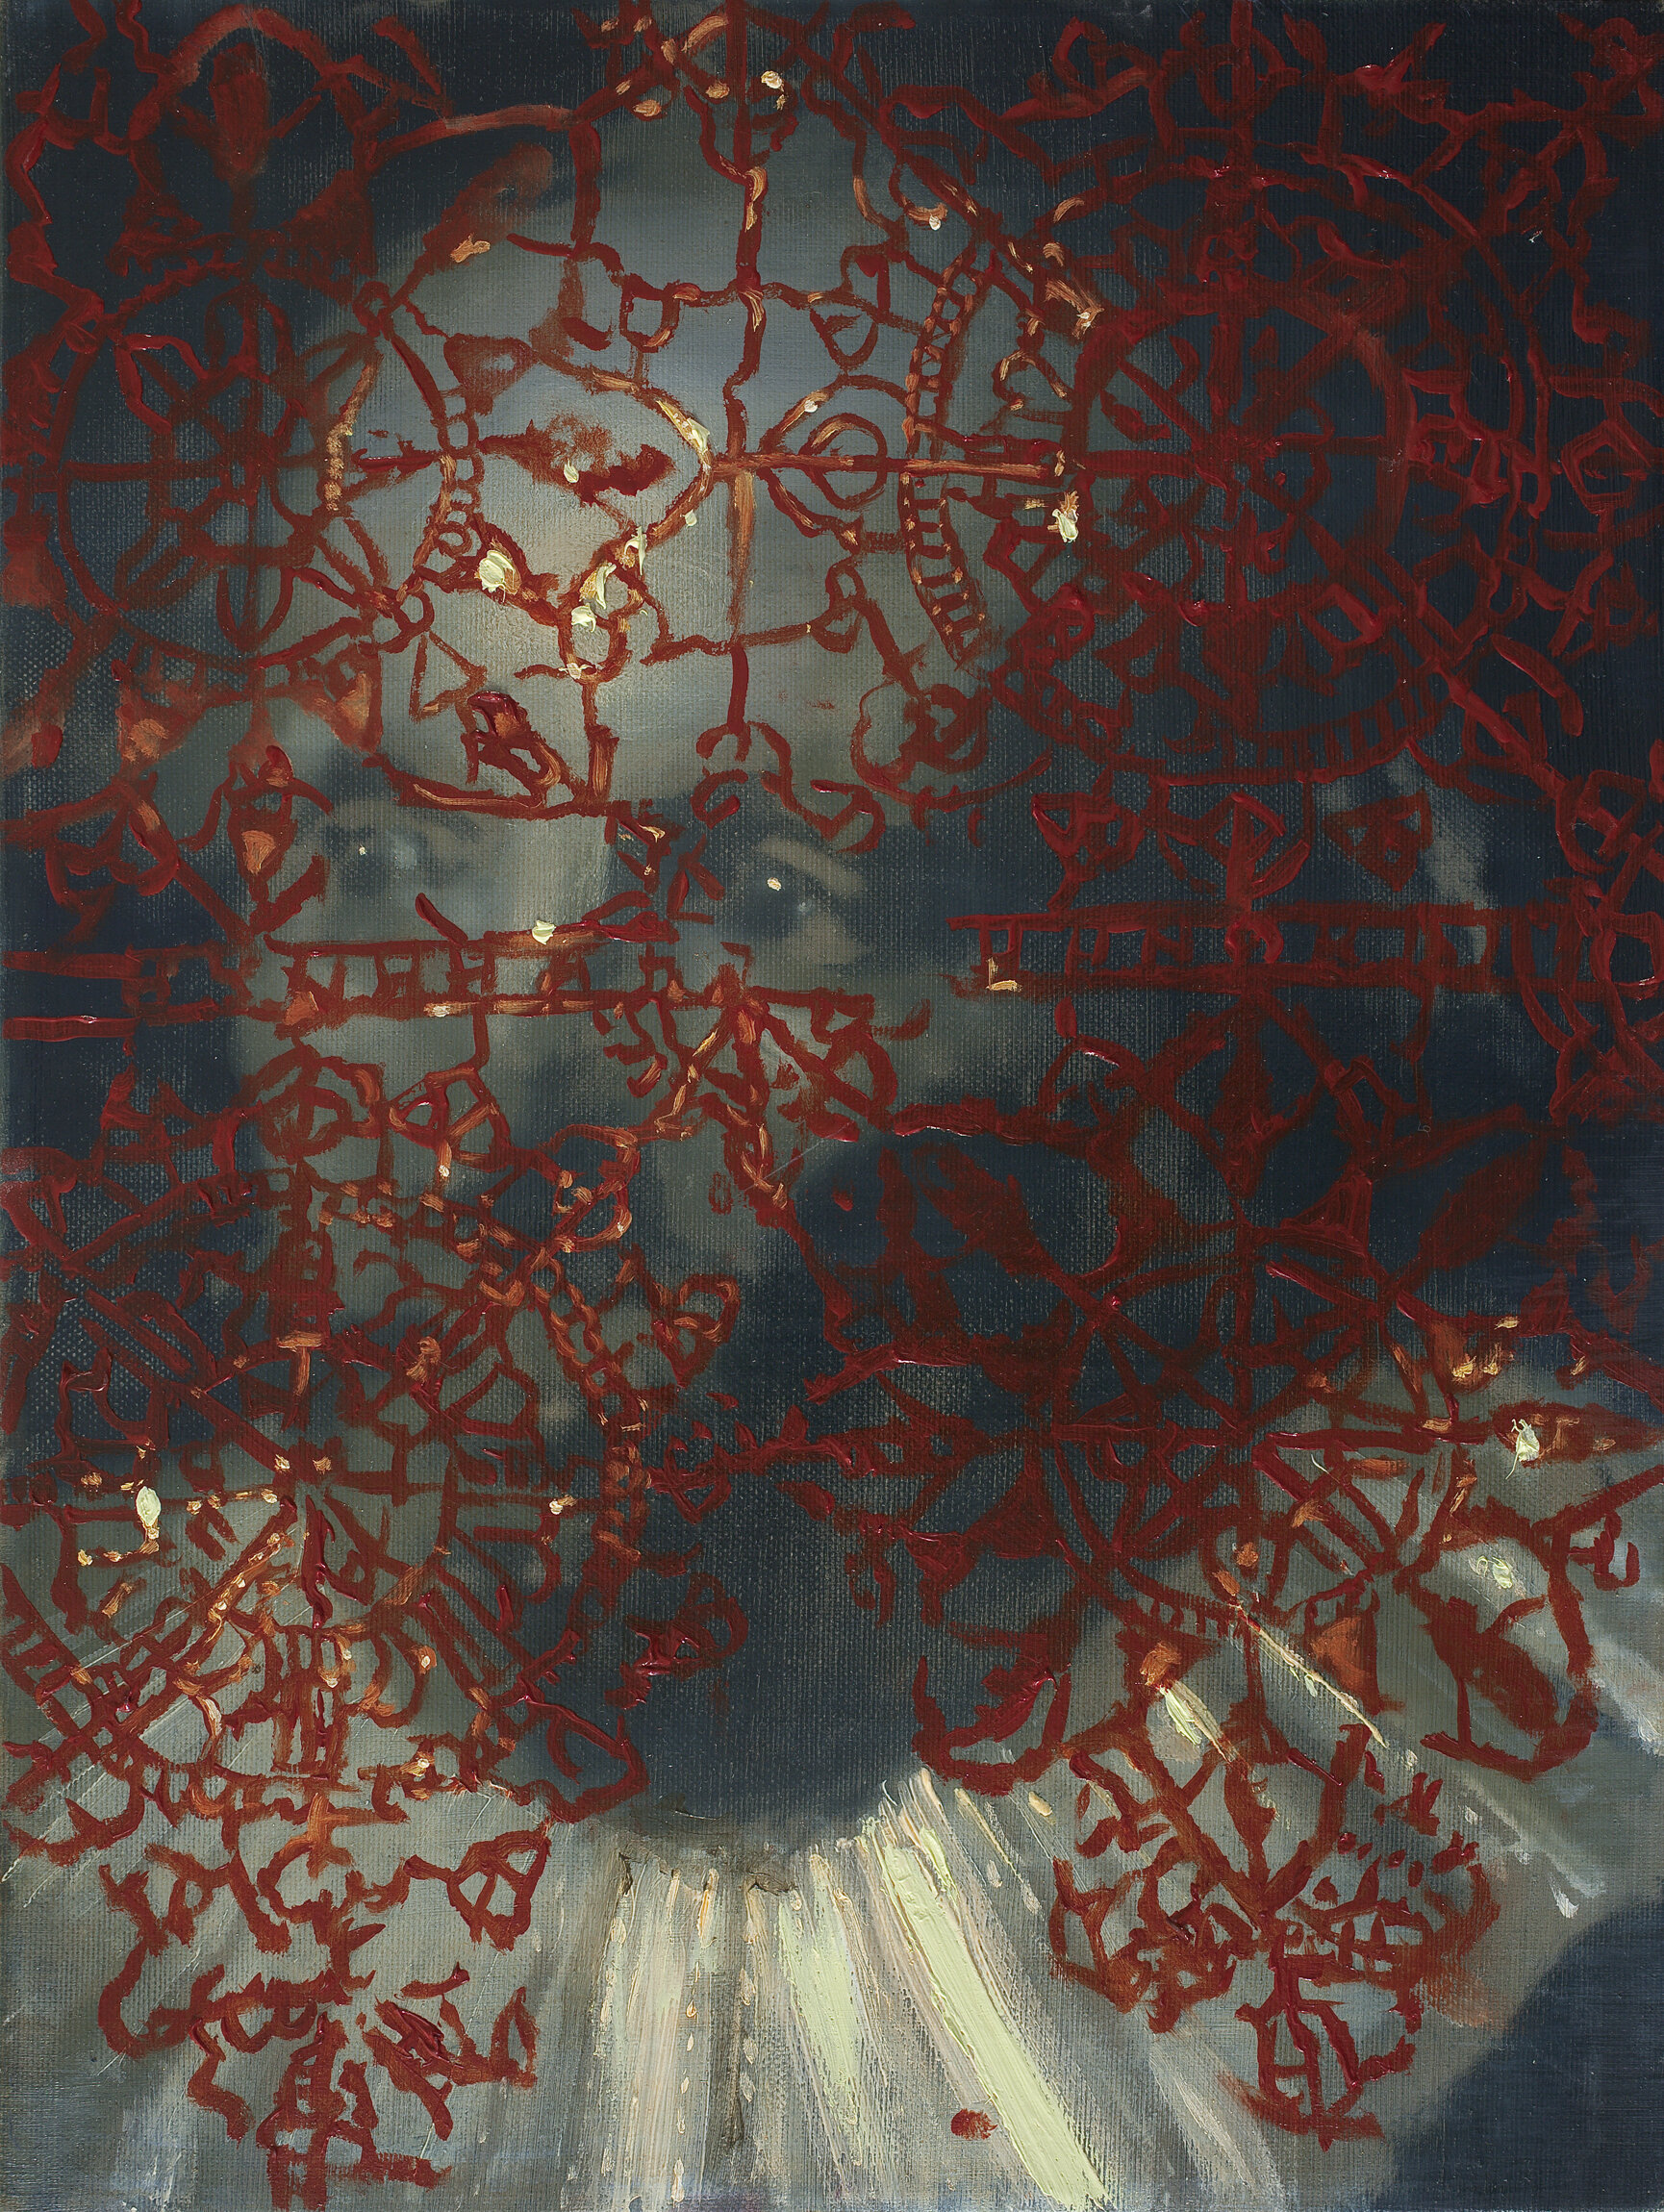 Listener (2011), oil on canvas, 40x30 cm